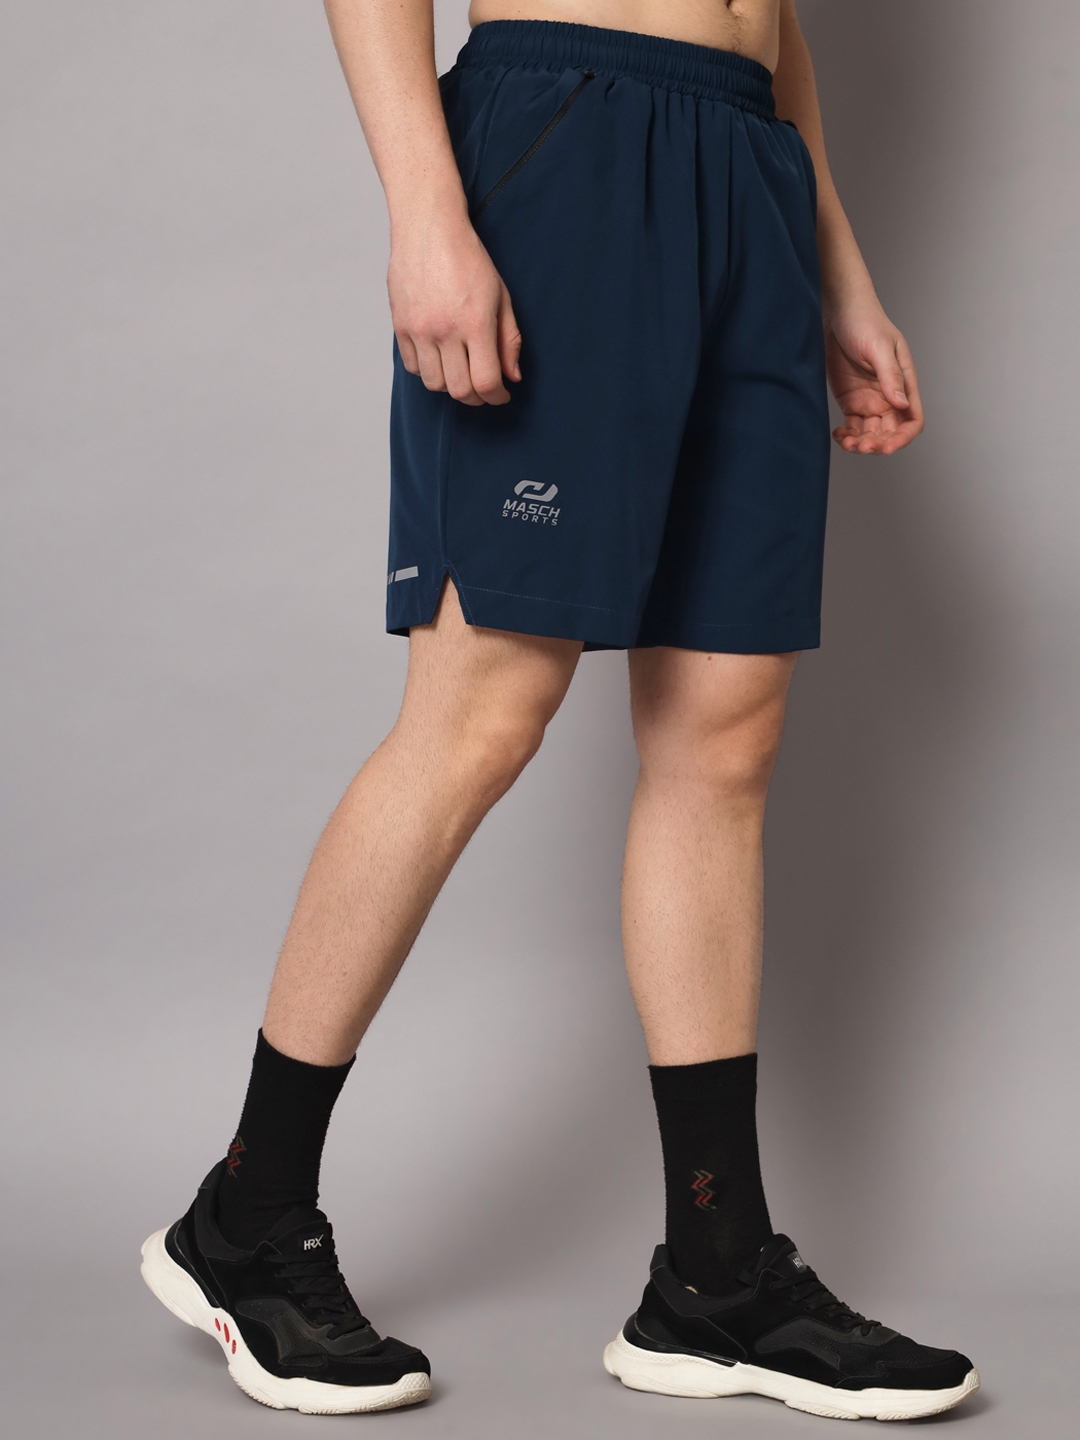 Masch Sports | Masch Sports Men’s Sports Wear, Active Wear, Gym, Running & Training Shorts with Zipped Pockets 3